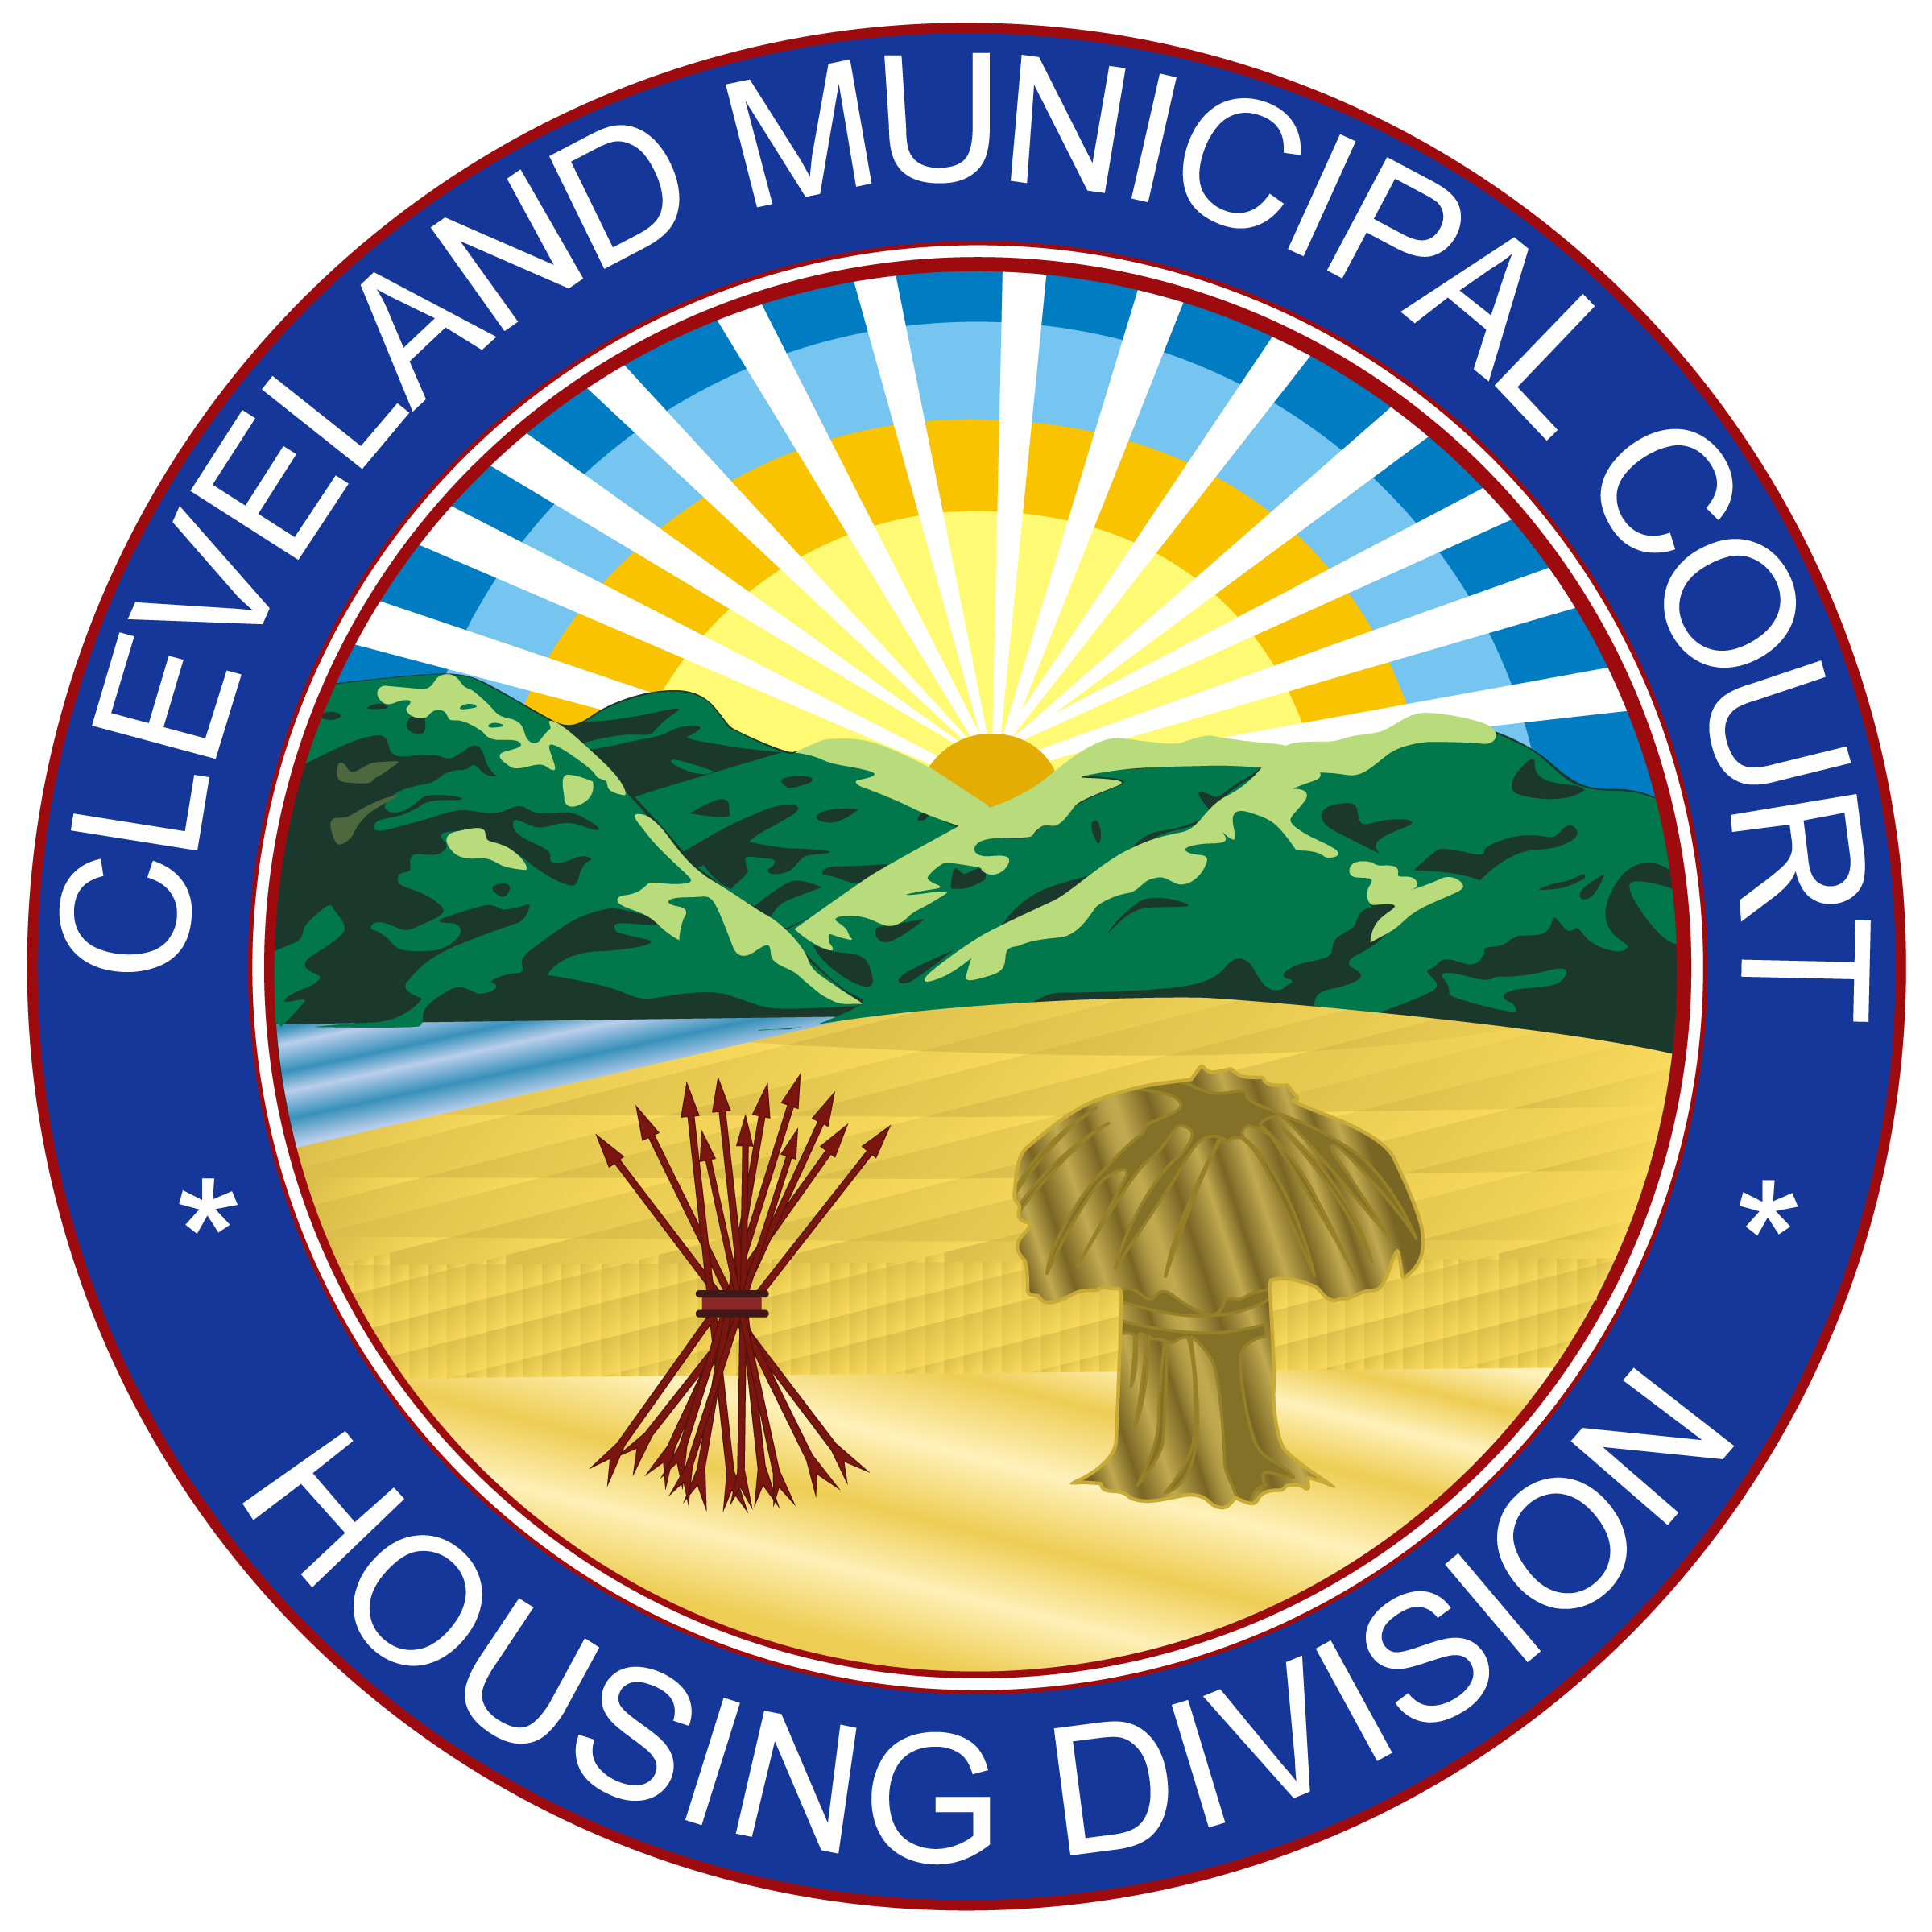 Cleveland Municipal Housing Court